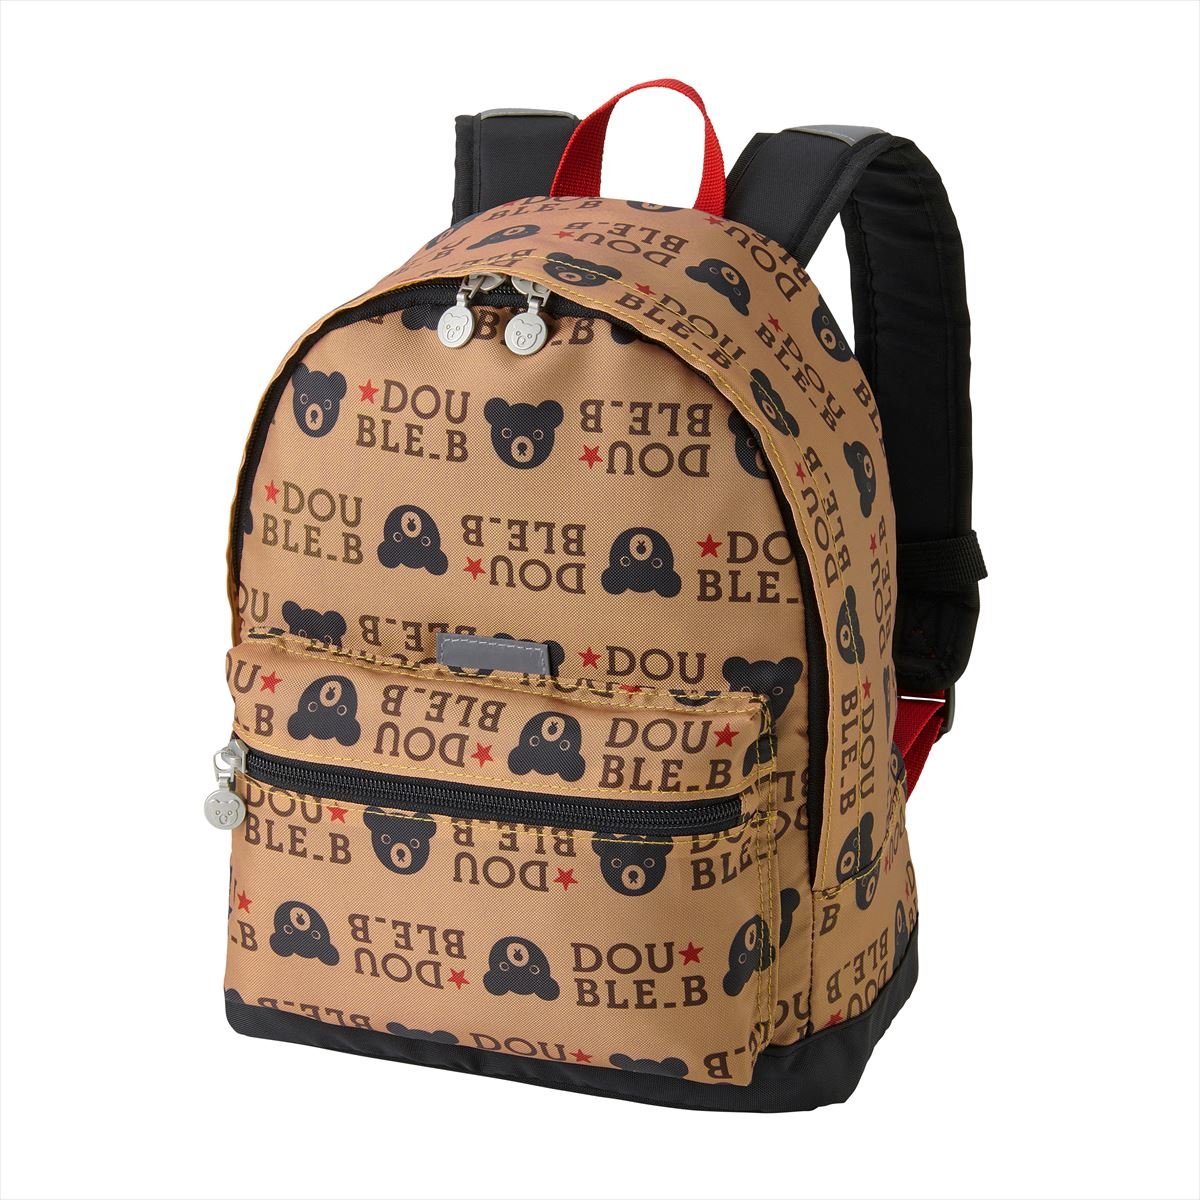 Double_B Logo Backpack - MIKI HOUSE USA